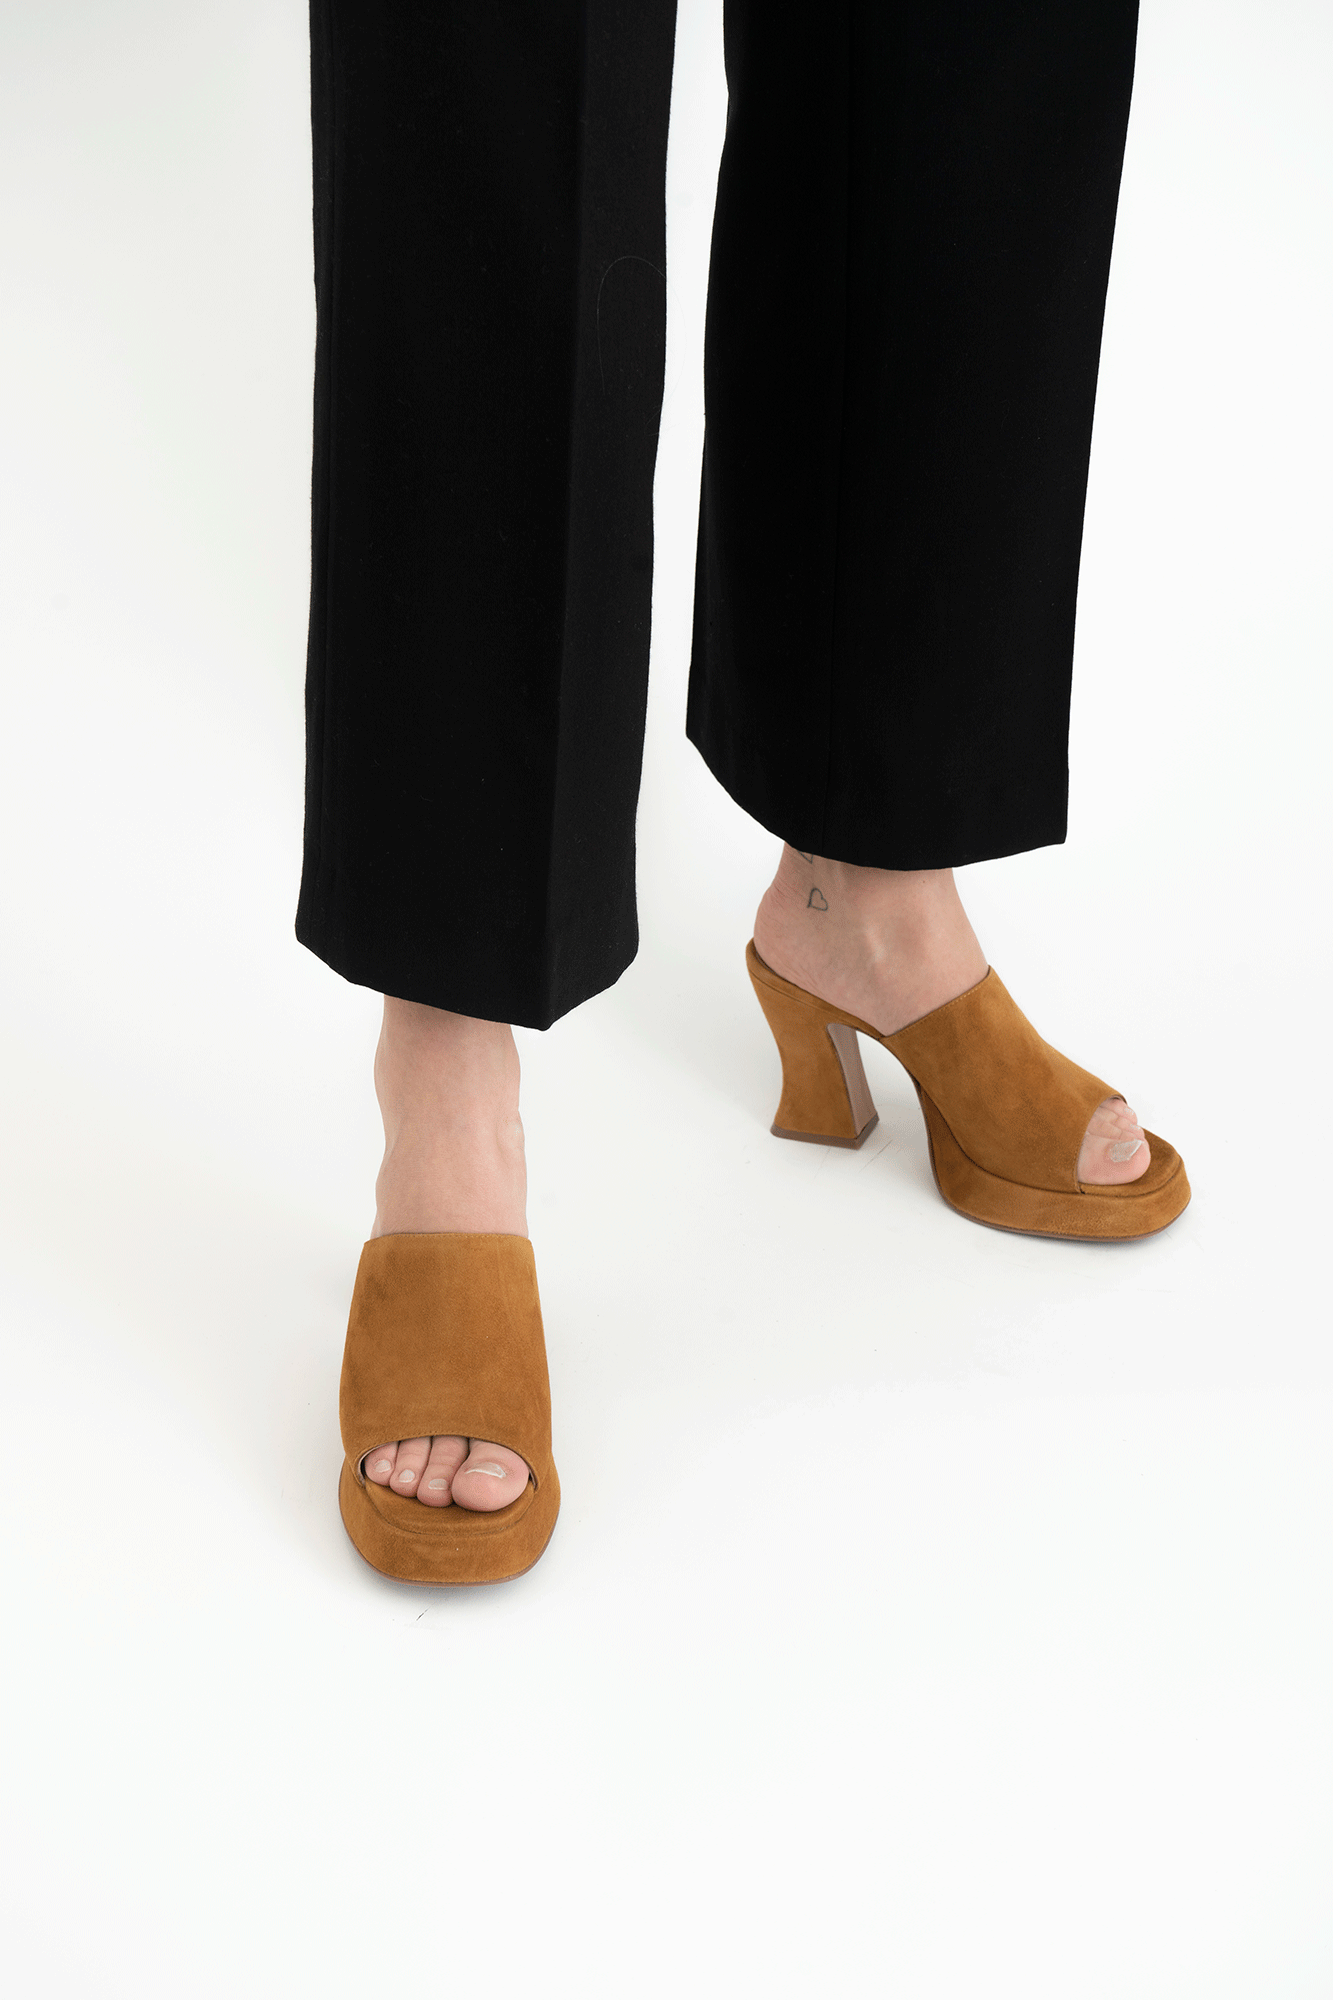 Amara plateau sandals, brown suede